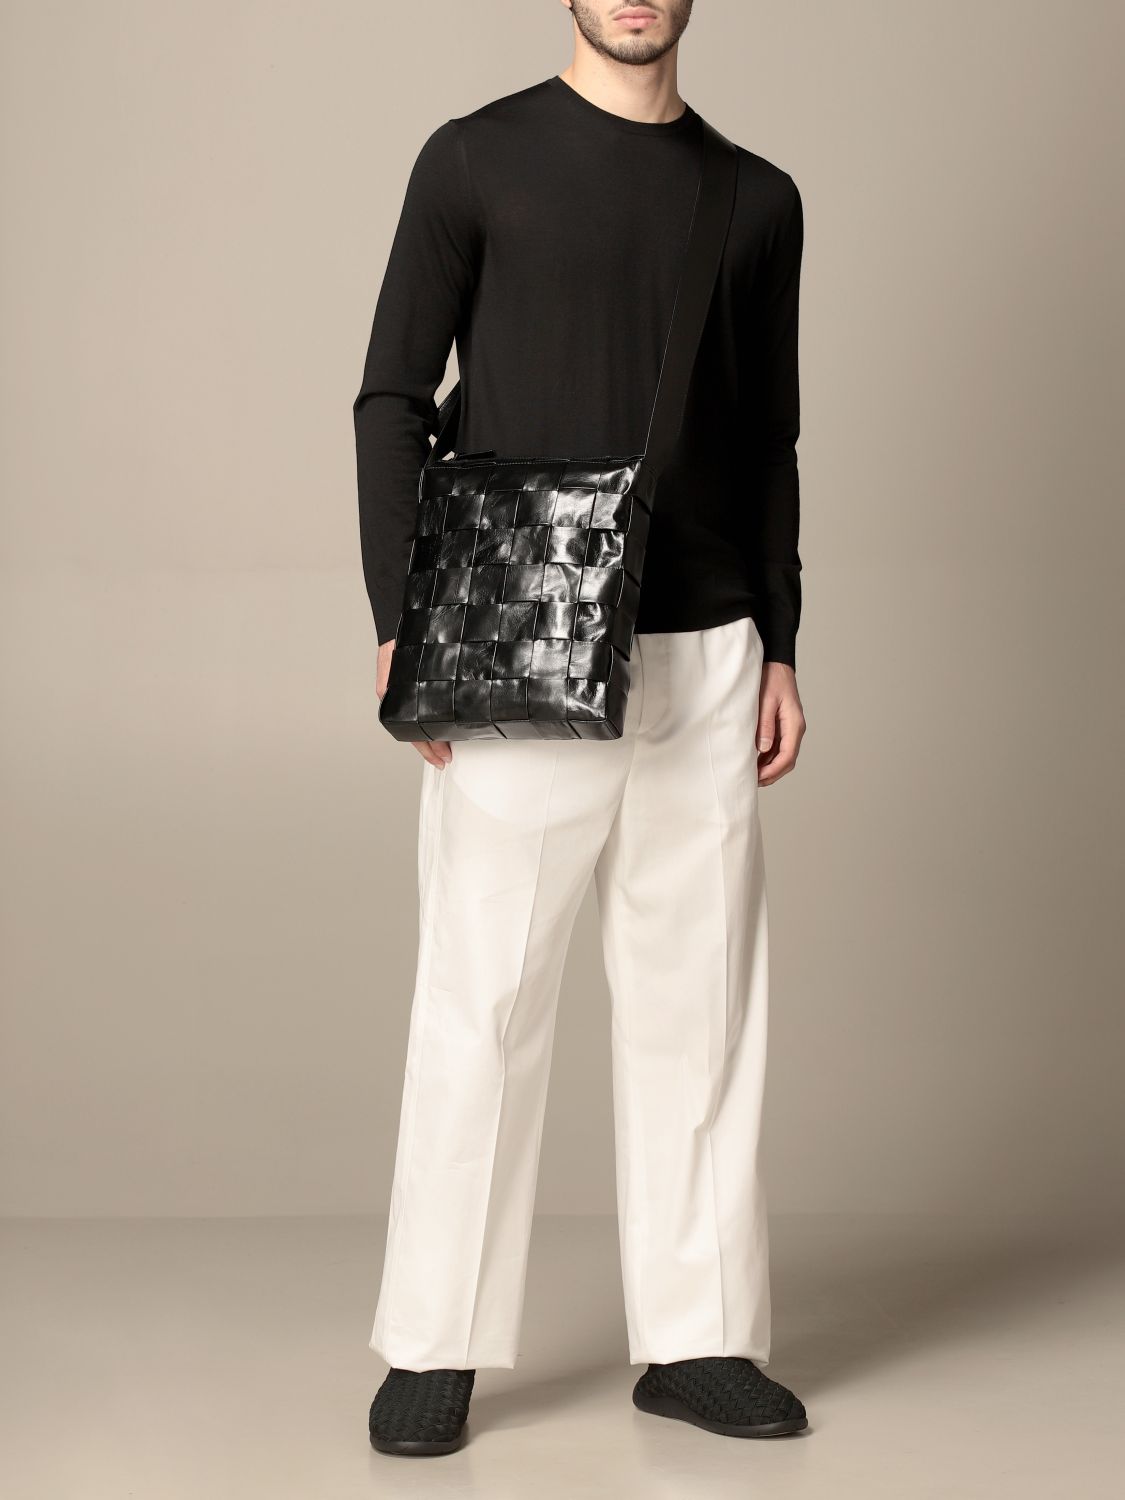 BOTTEGA VENETA: Messenger bag in woven leather | Shoulder Bag Bottega ...